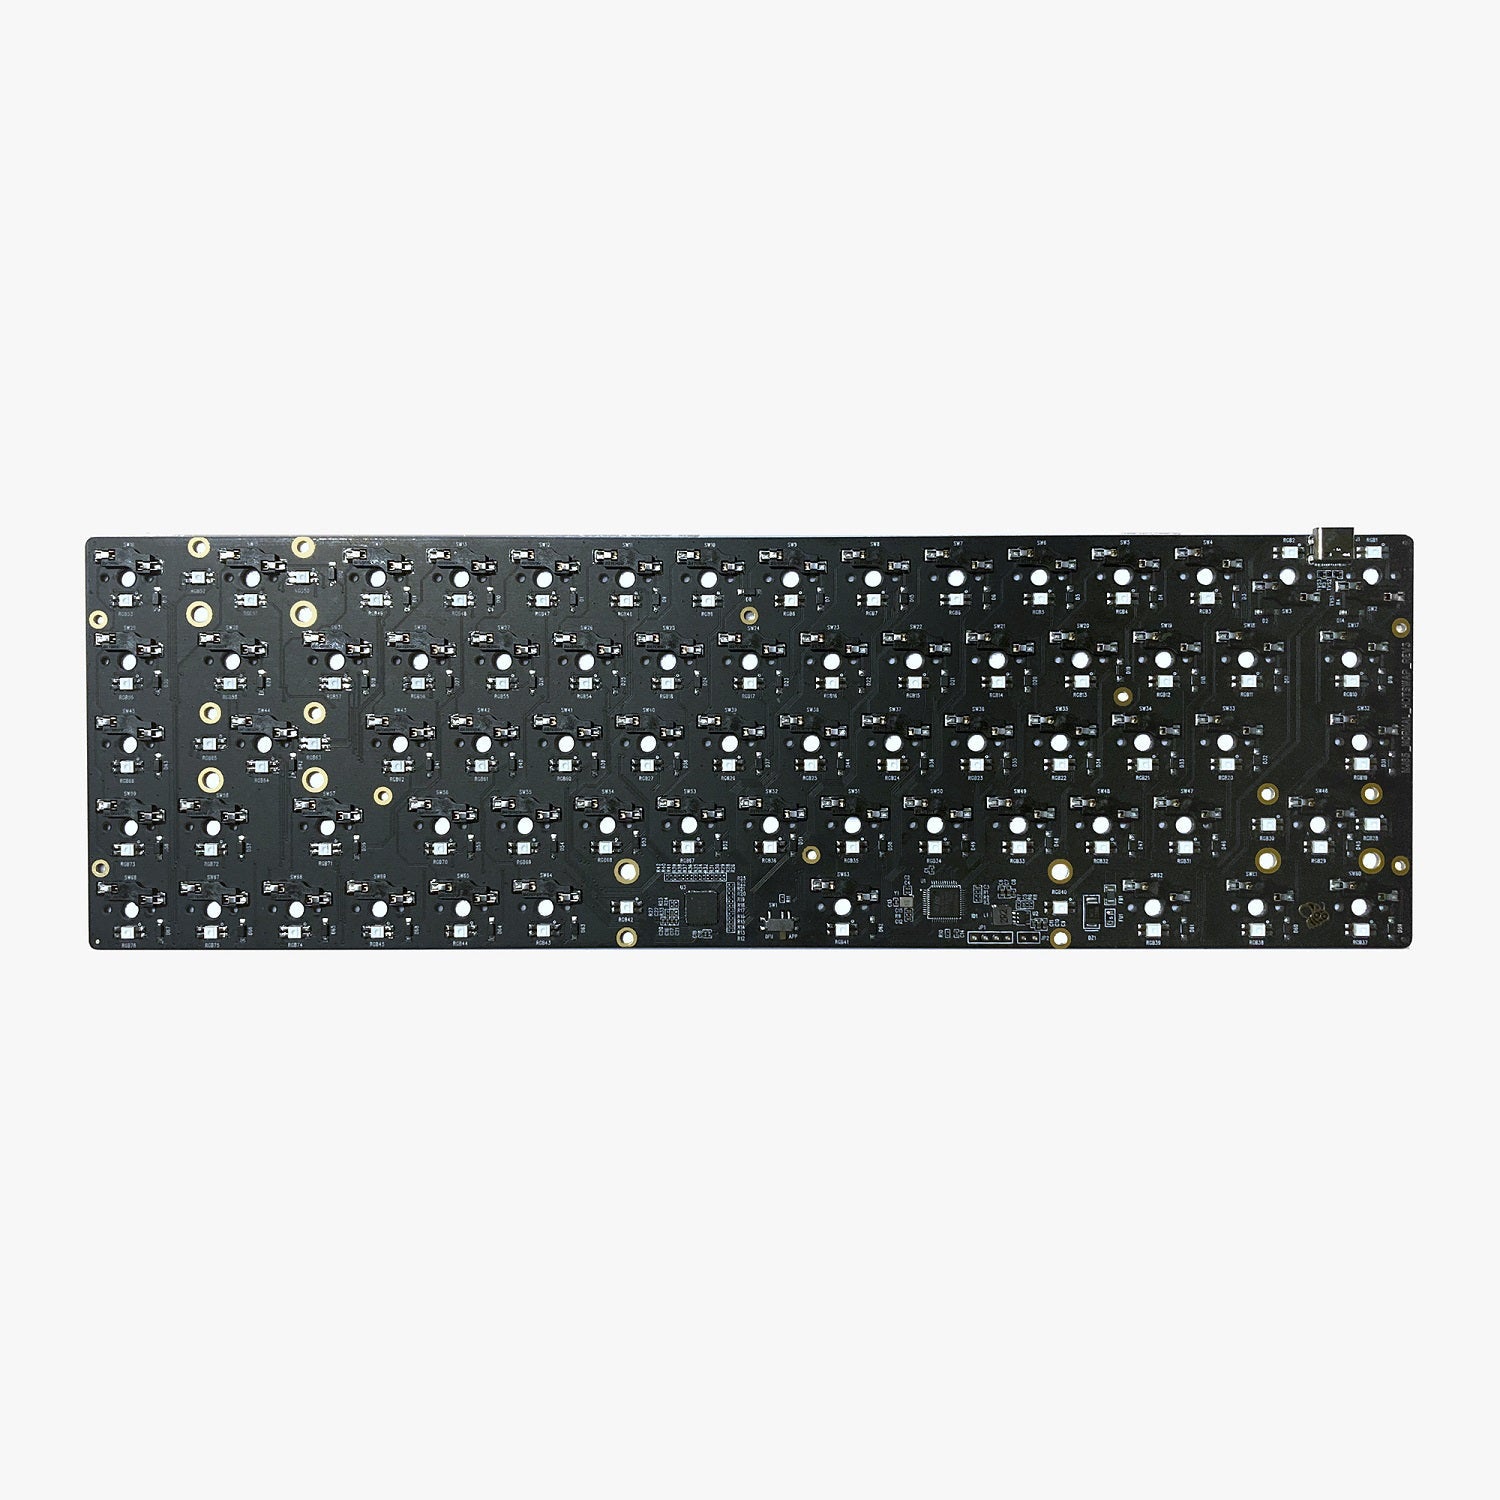 MelGeek Mojo65 68key 5.1Bluetooth y kit de teclado mecánico de aluminio con cable